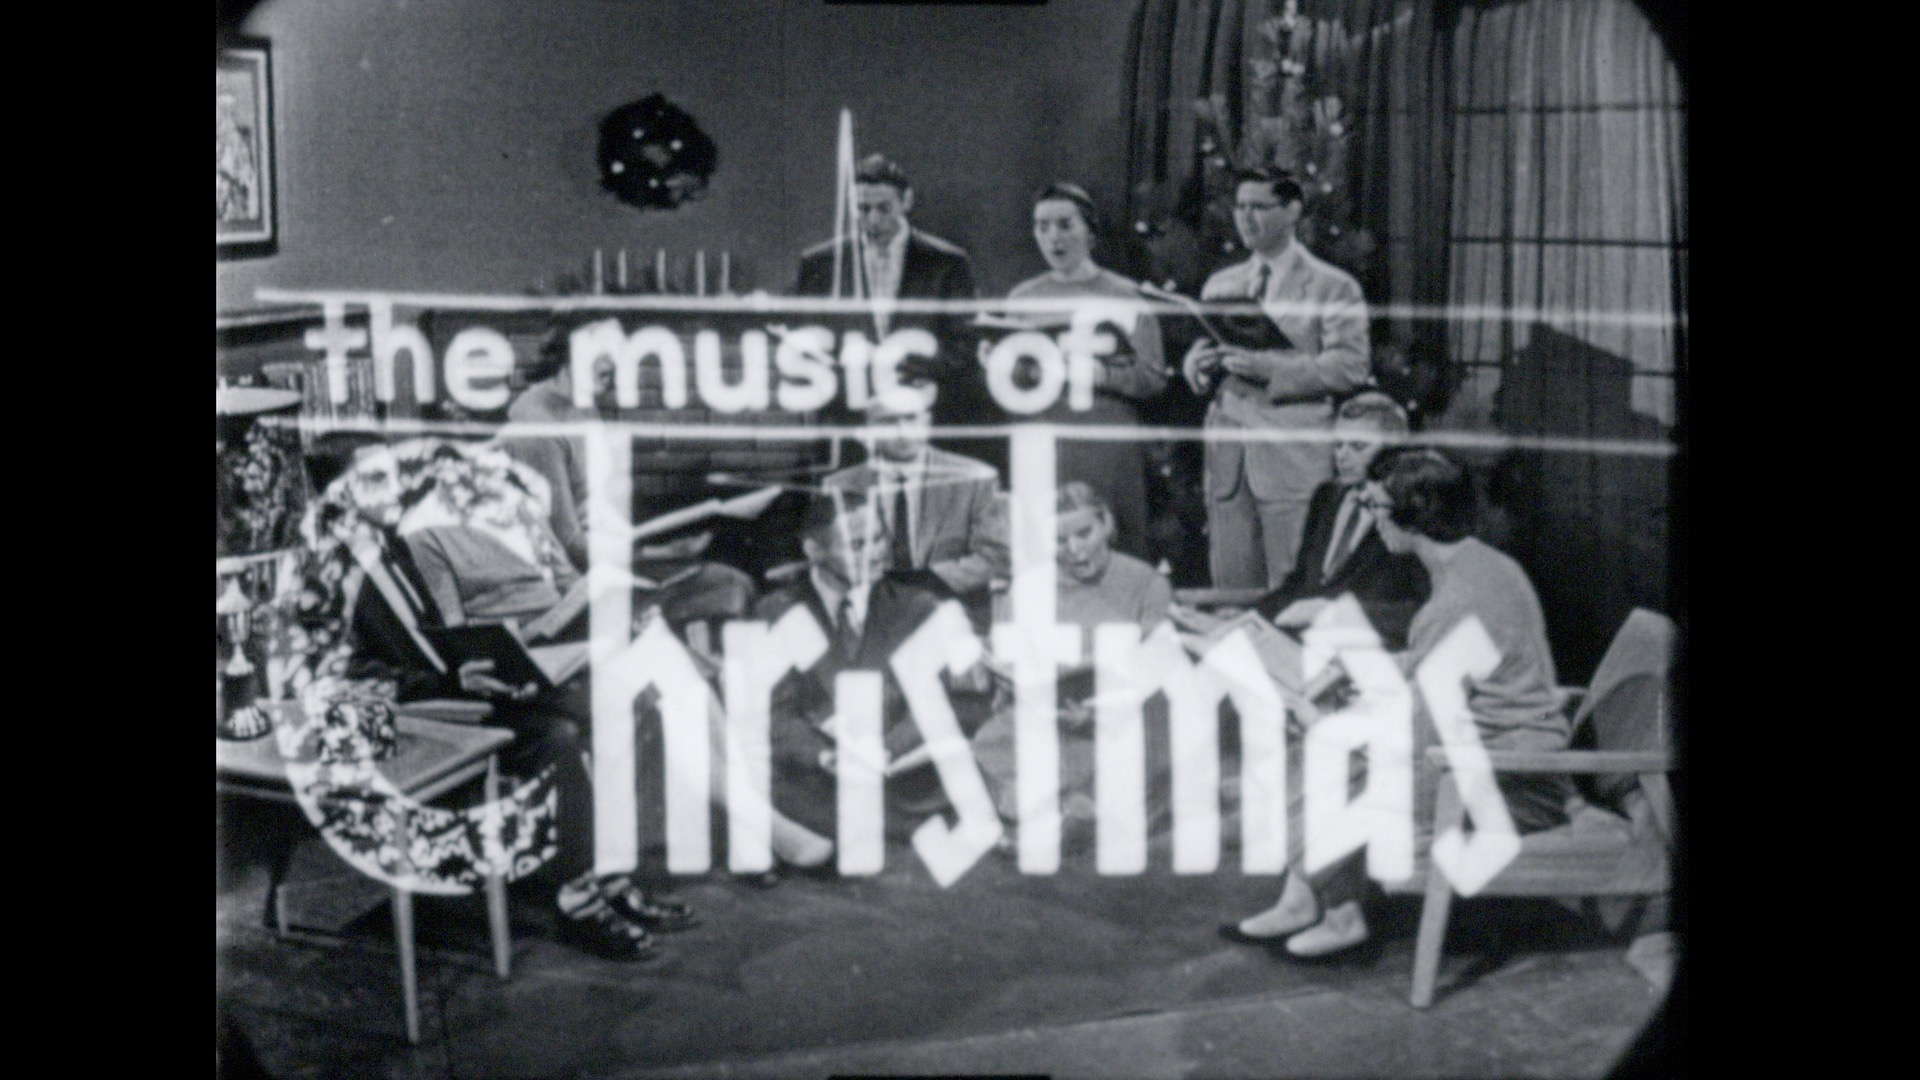 The Music of Christmas, 1956